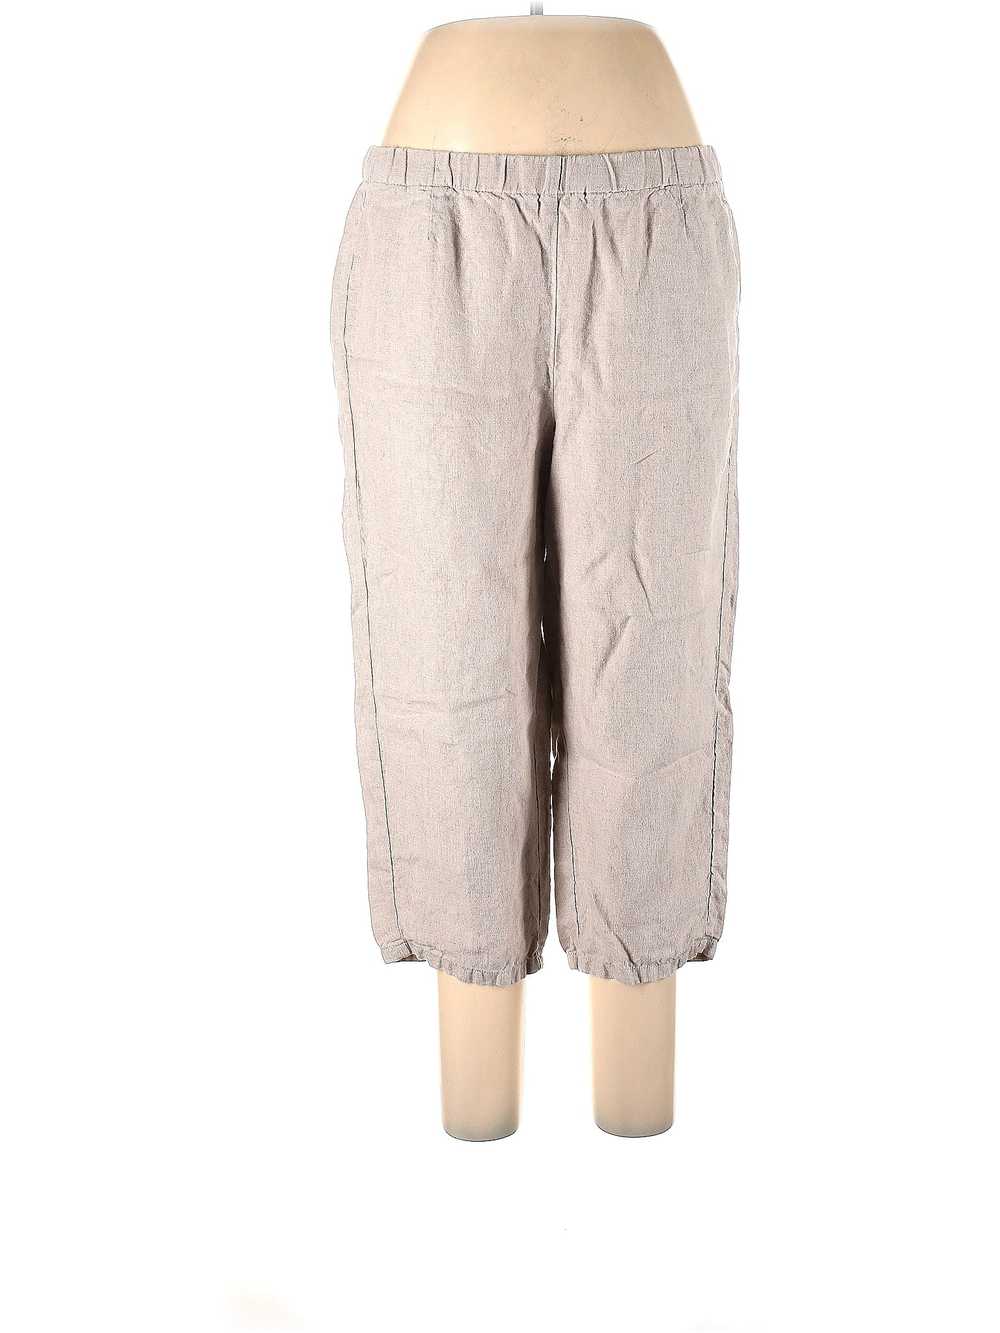 J.Jill Women Gray Linen Pants L Petites - image 1